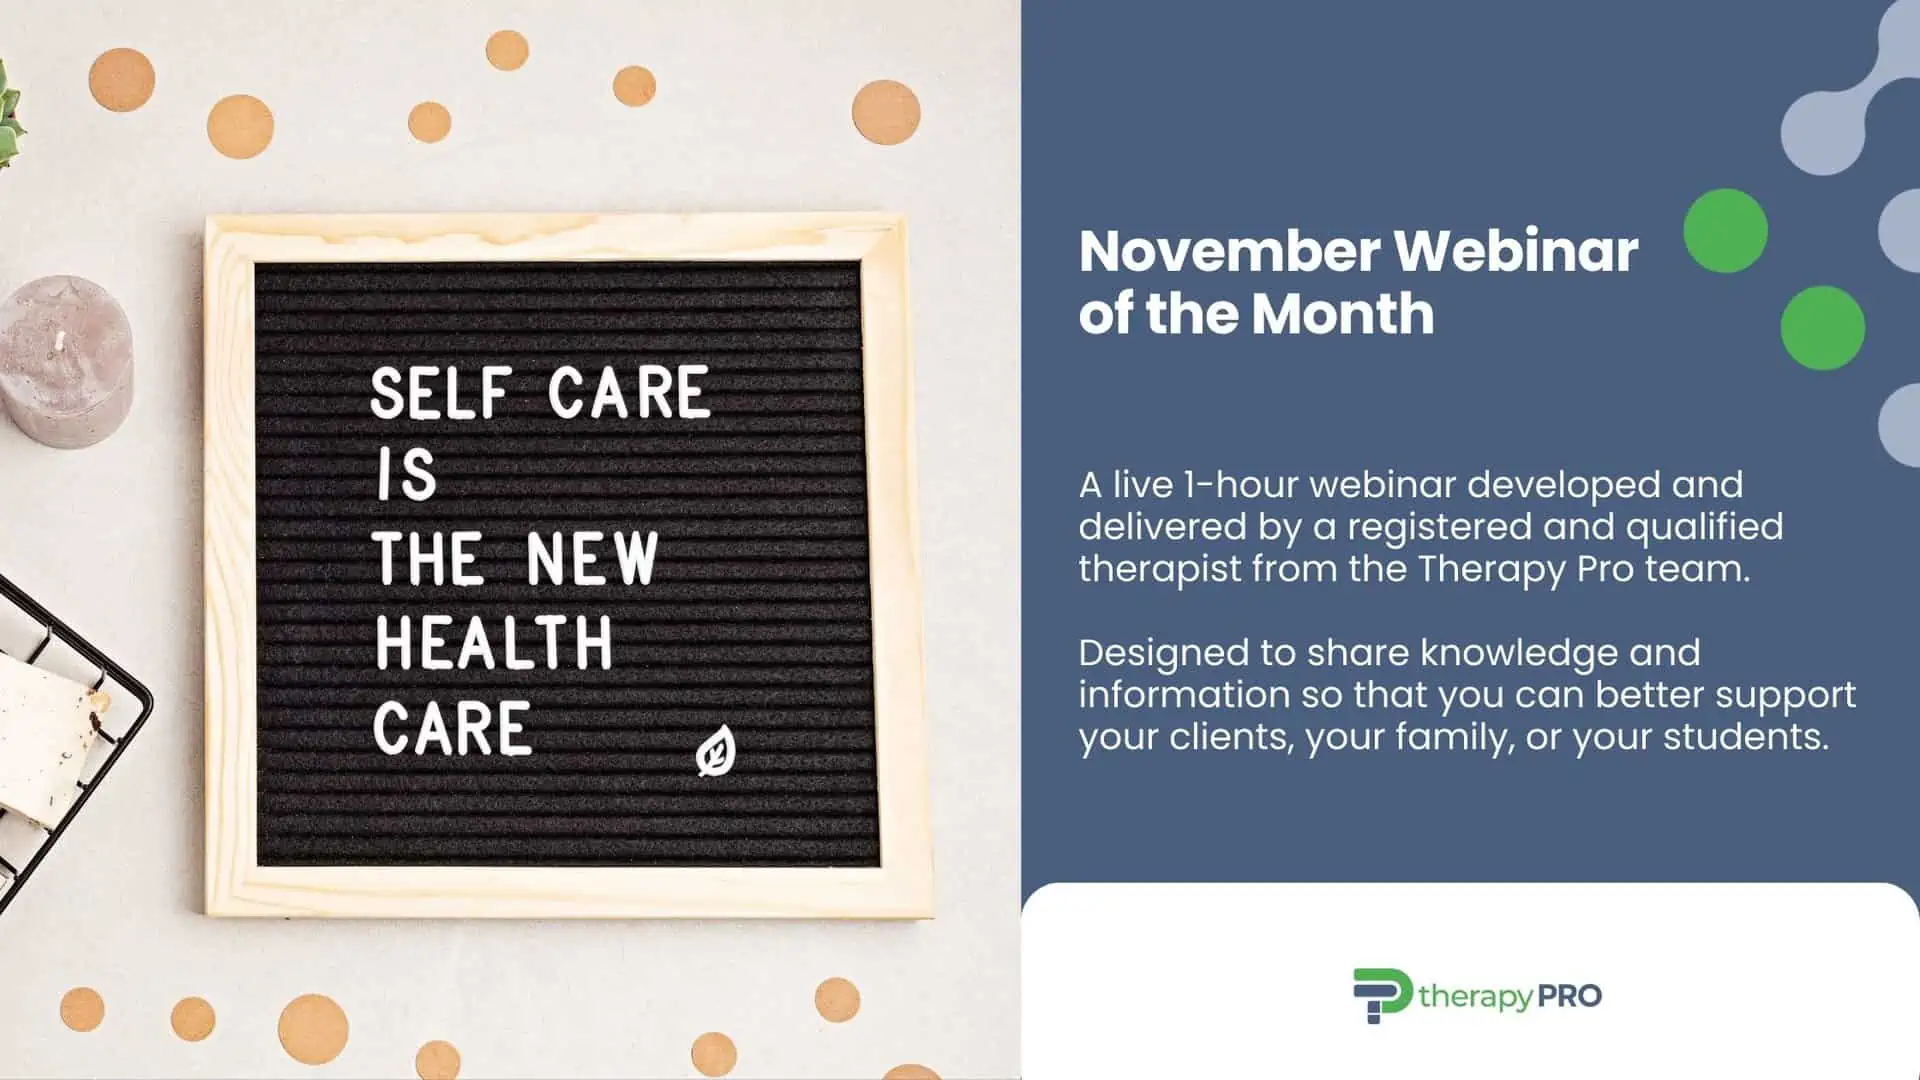 November webinar - self-care by Therpy Pro